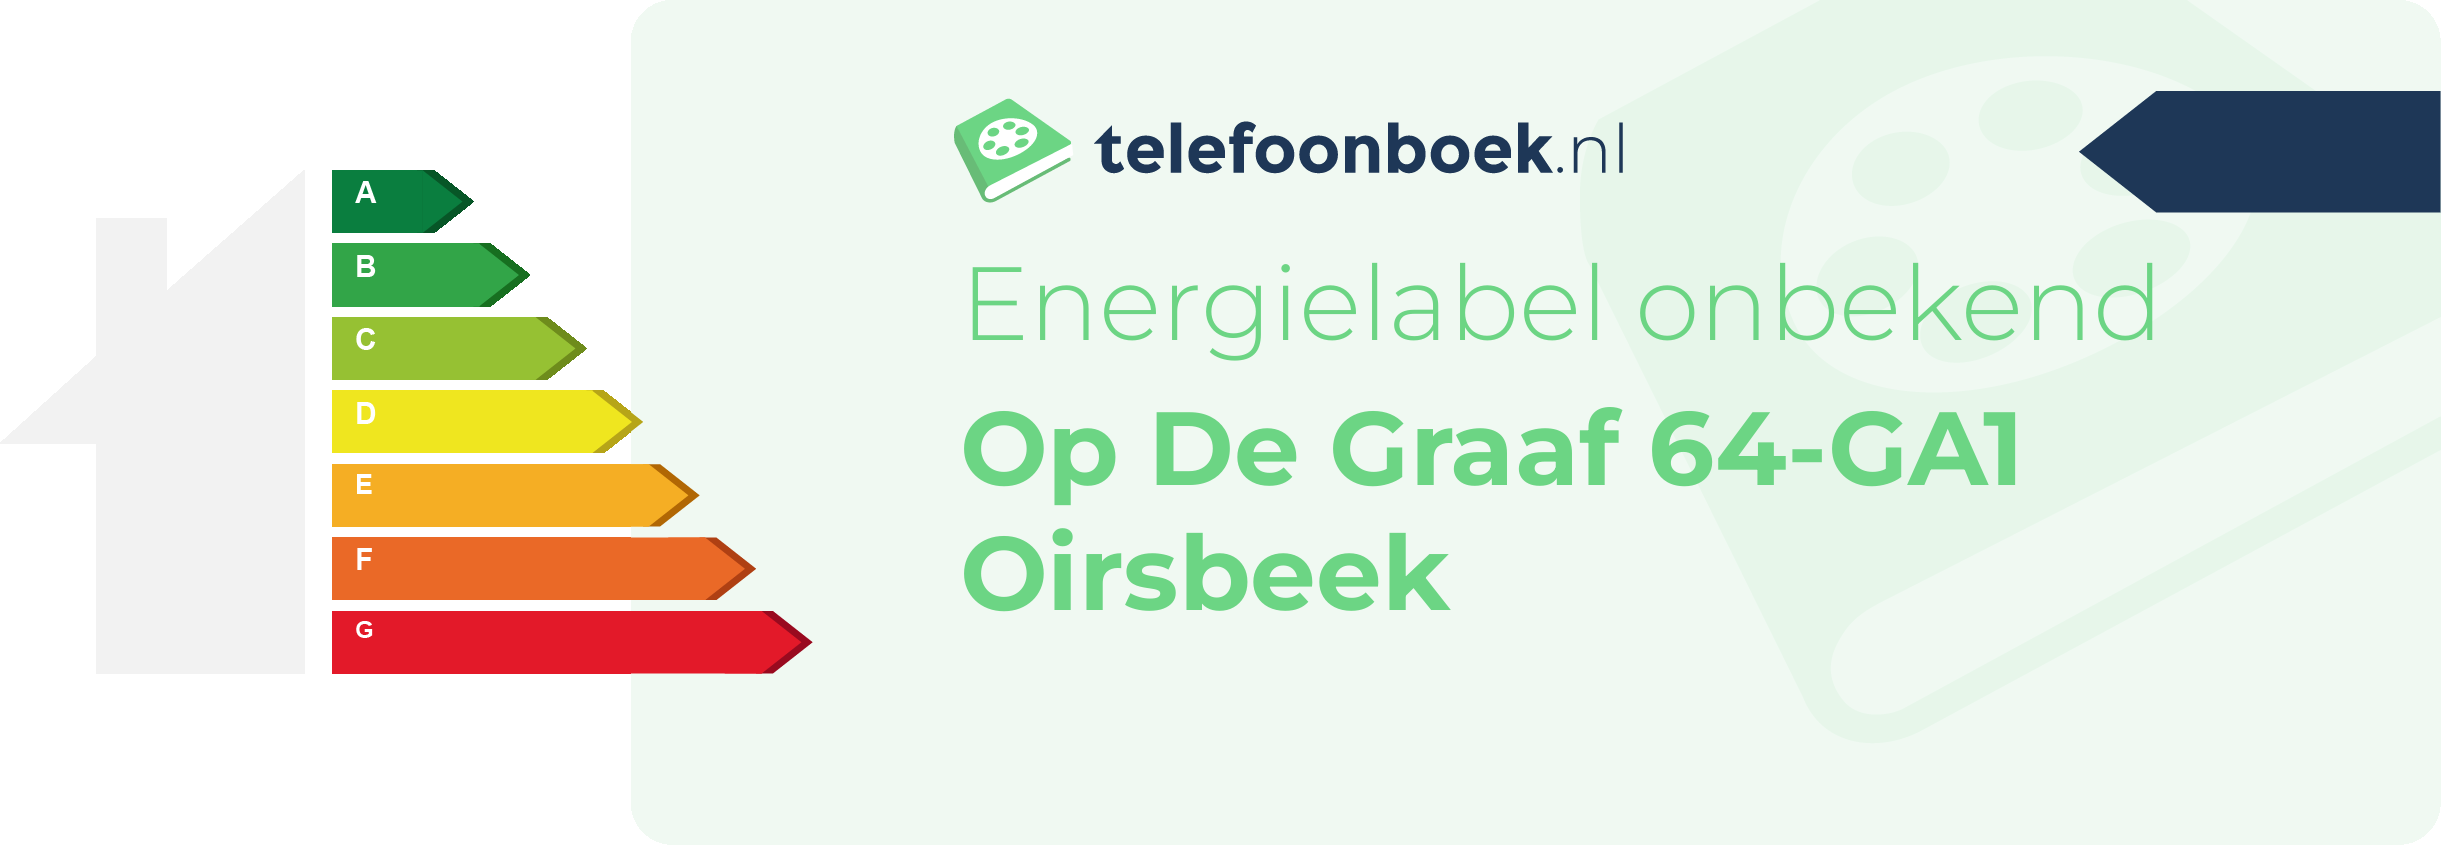 Energielabel Op De Graaf 64-GA1 Oirsbeek